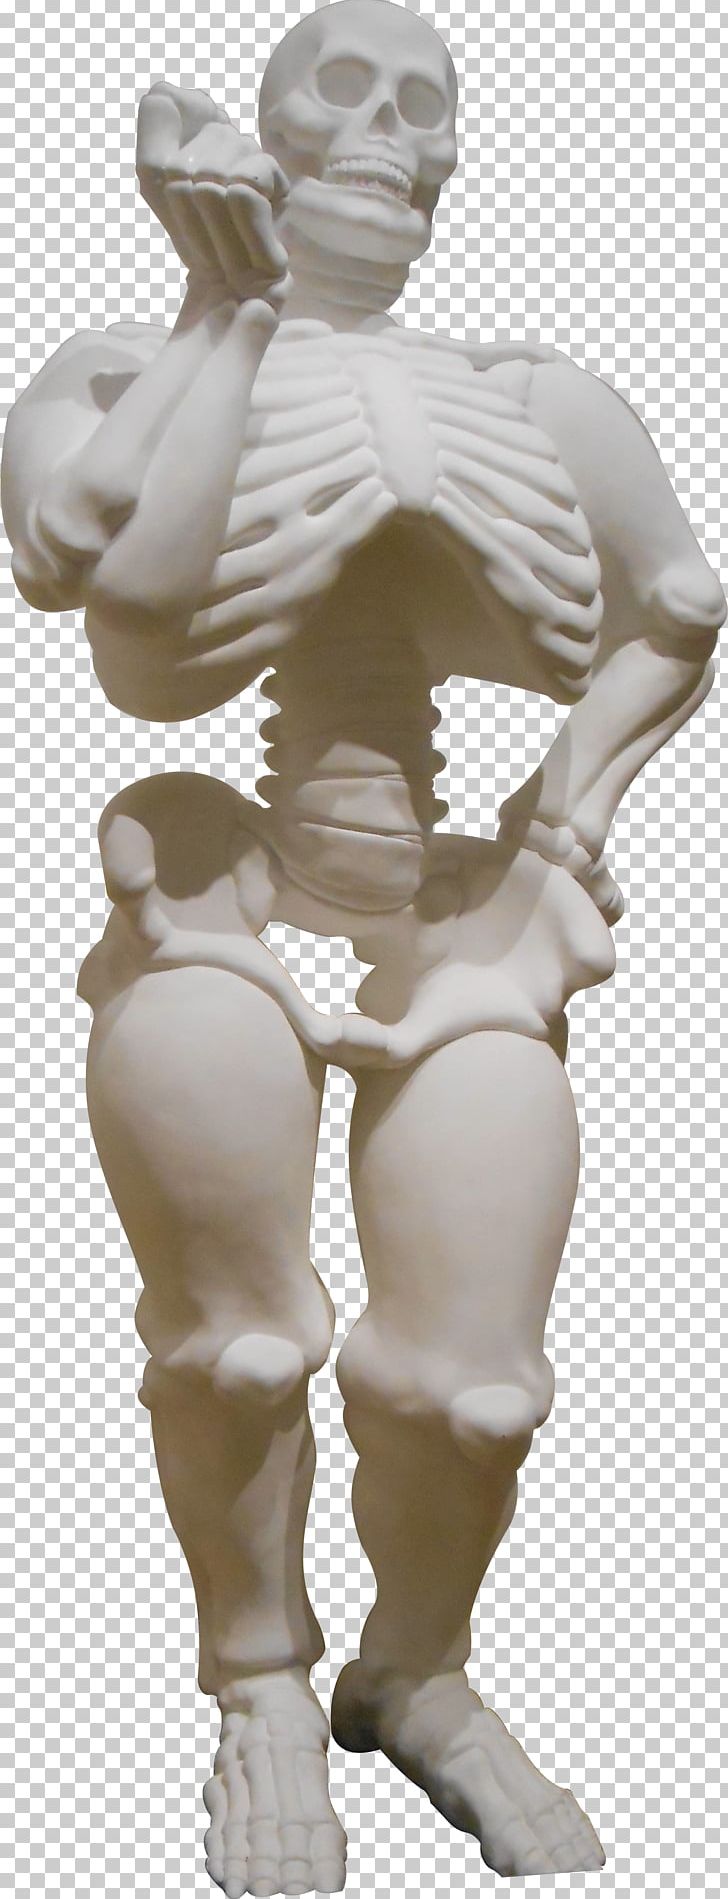 Human Skeleton Bone Human Body Figurine PNG, Clipart, Arm, Bone, Calcium, Classical Sculpture, Cutout Free PNG Download